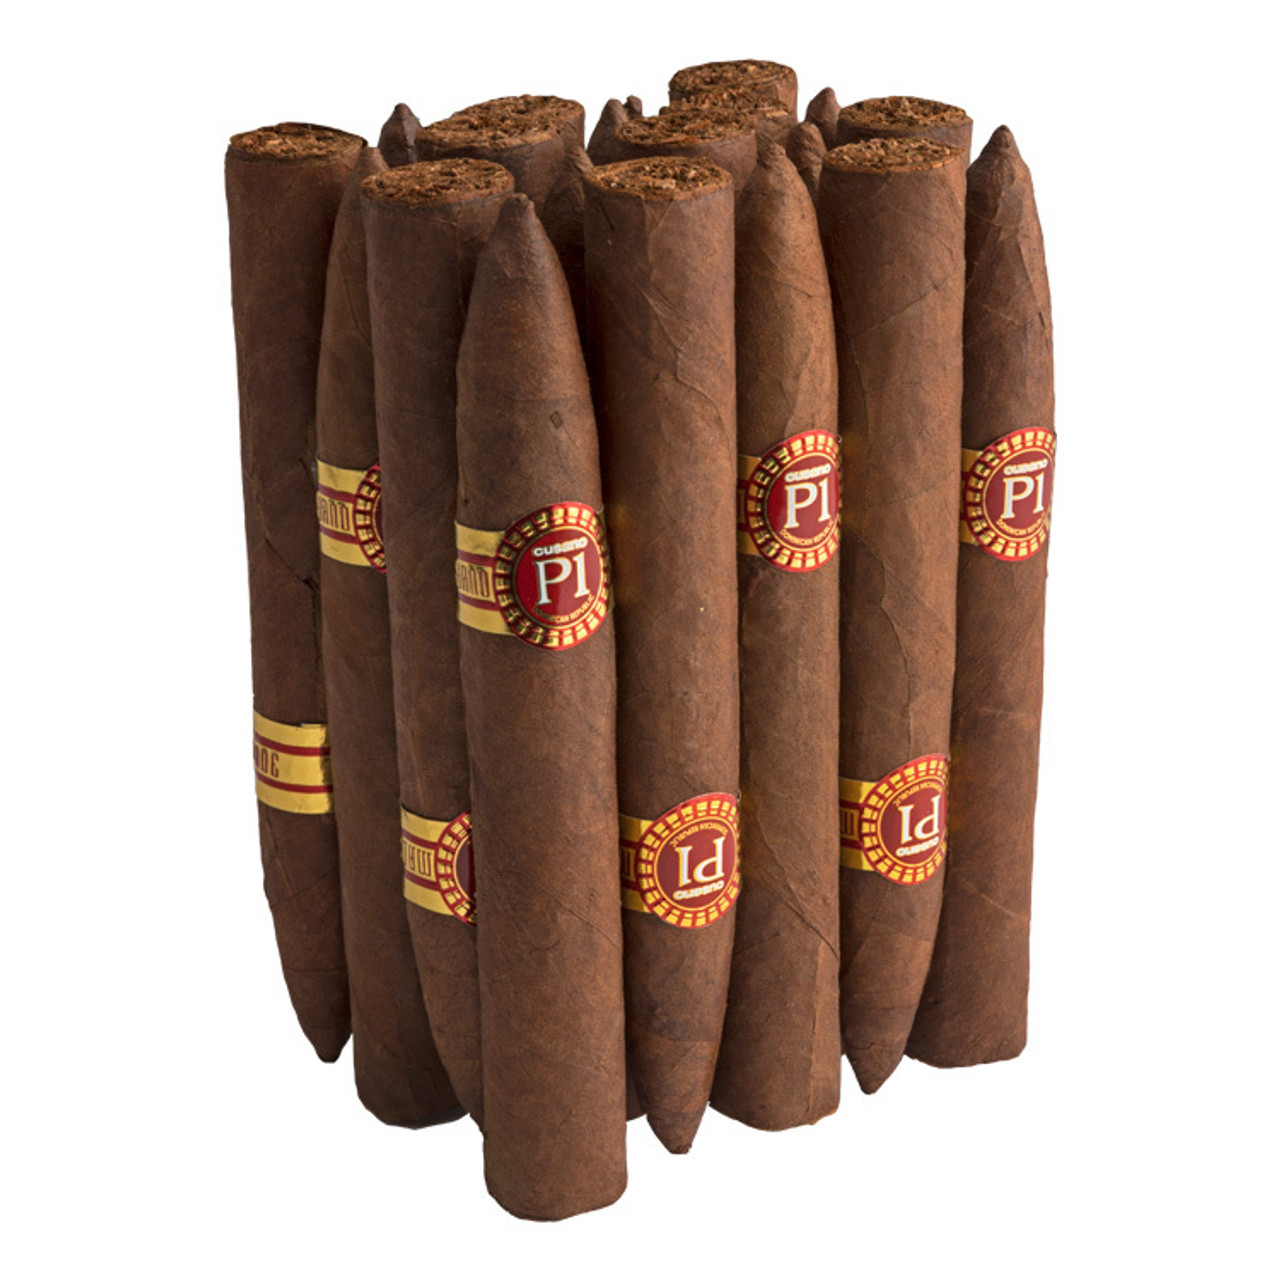 Cusano P1 Bundle Torpedo Cigars - 6 x 52 (Bundle of 20) *Box